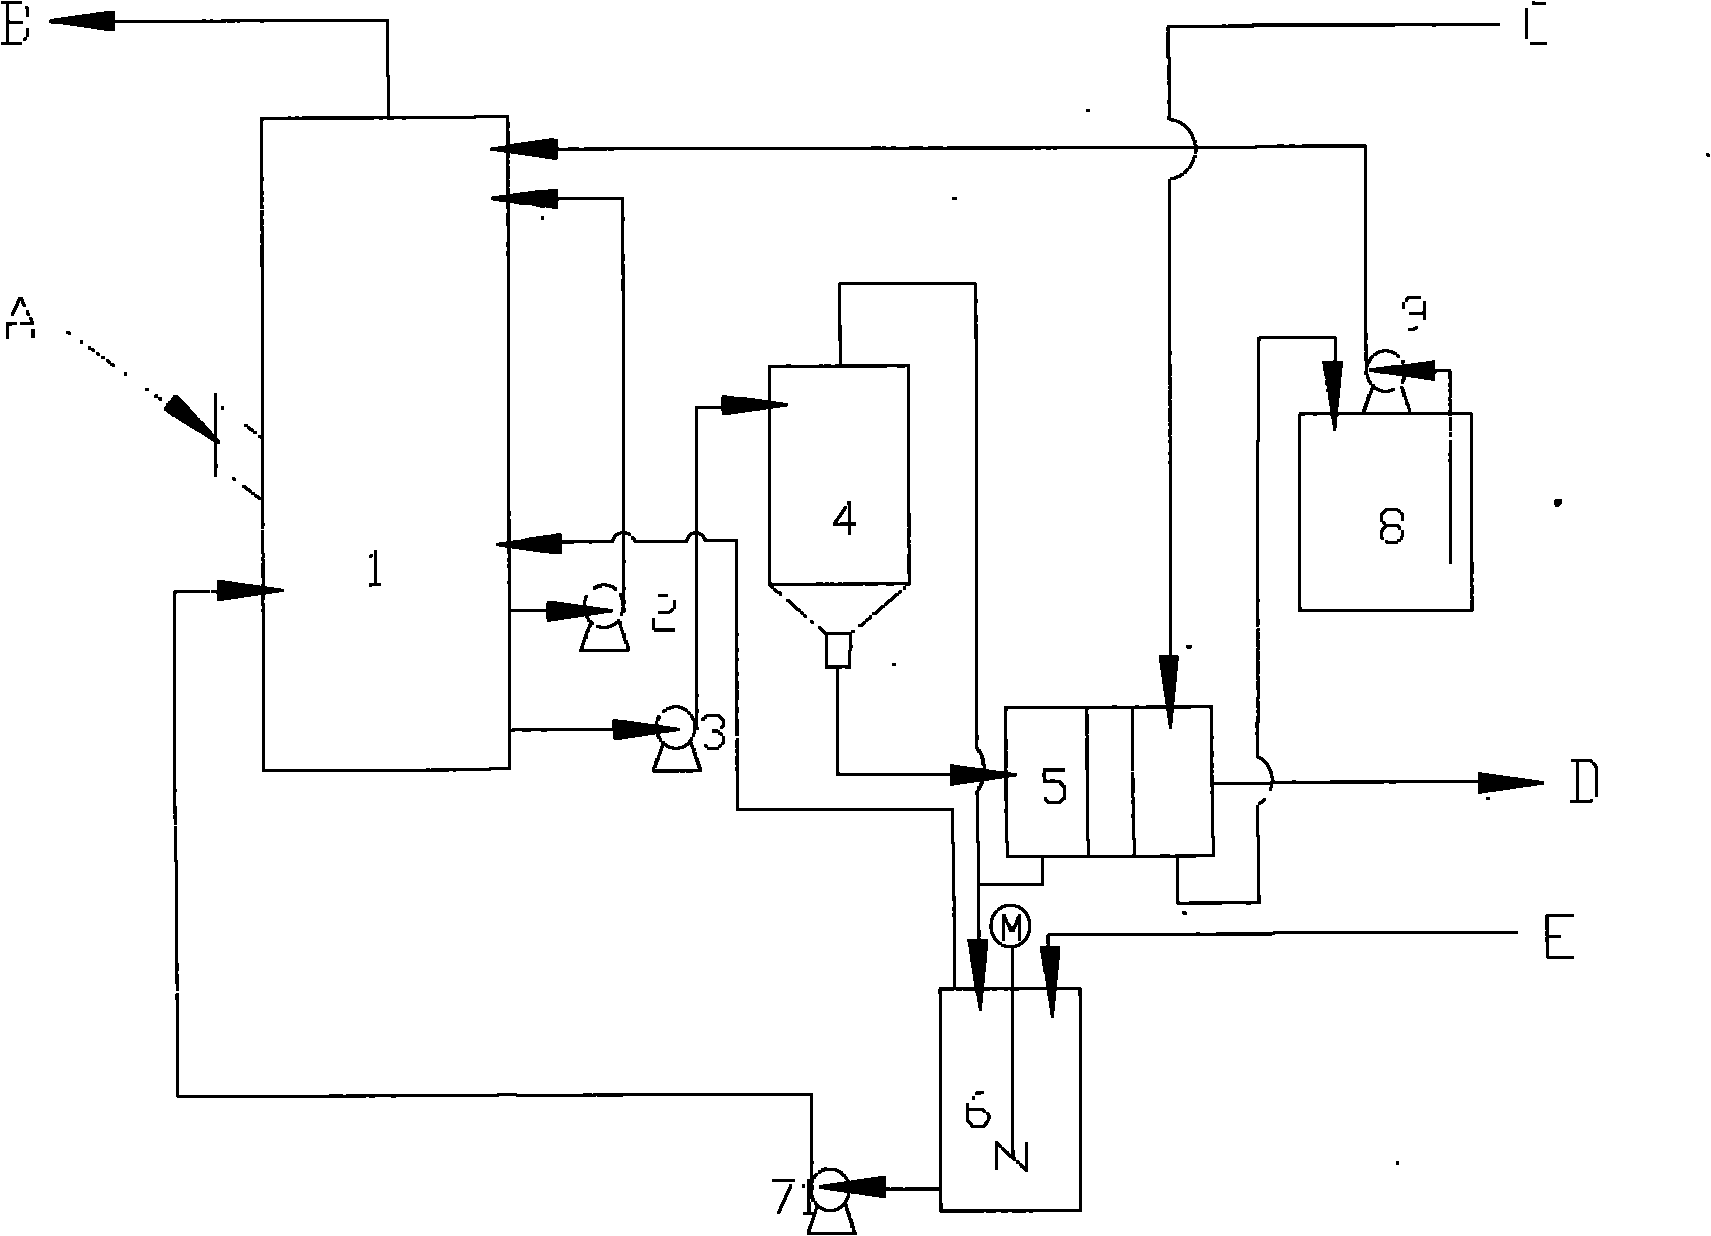 Ammonium sulphate-limestone method for desulphurization of flue gas